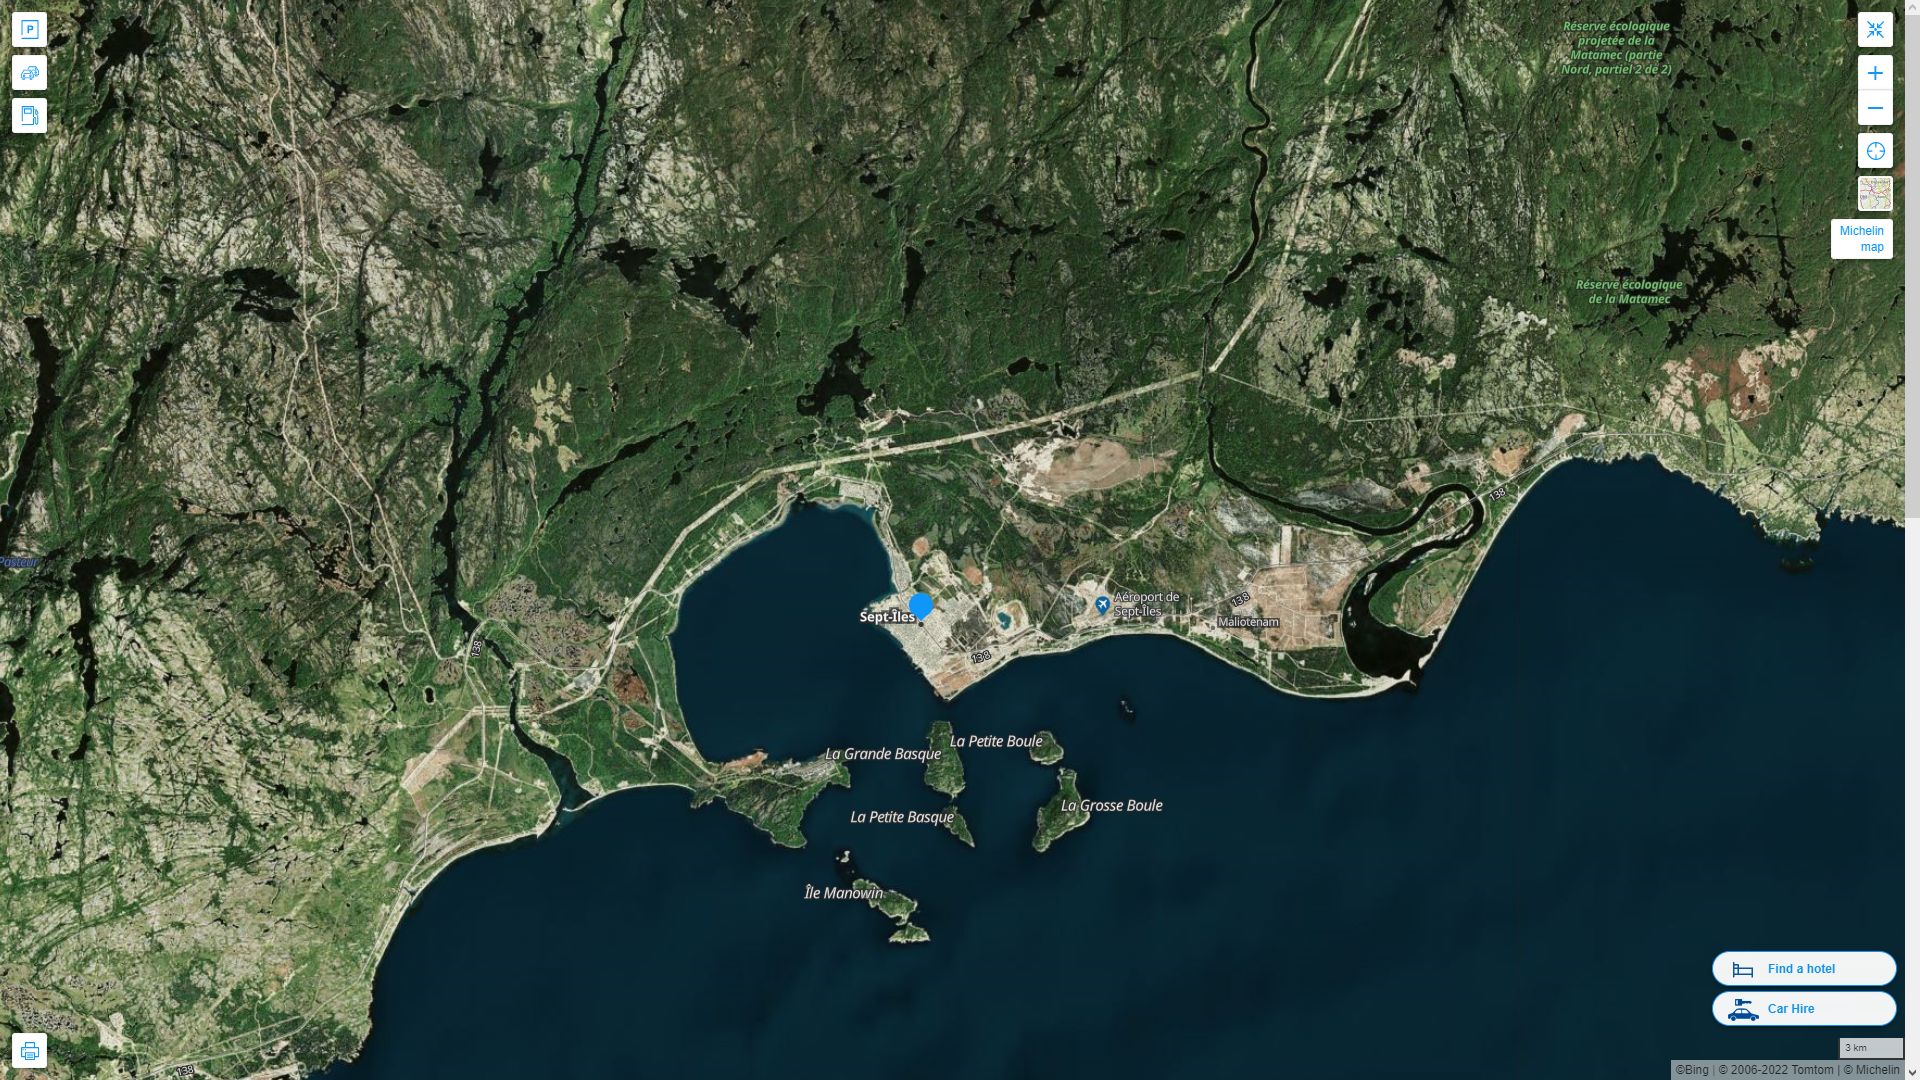 Sept iles Canada Autoroute et carte routiere avec vue satellite